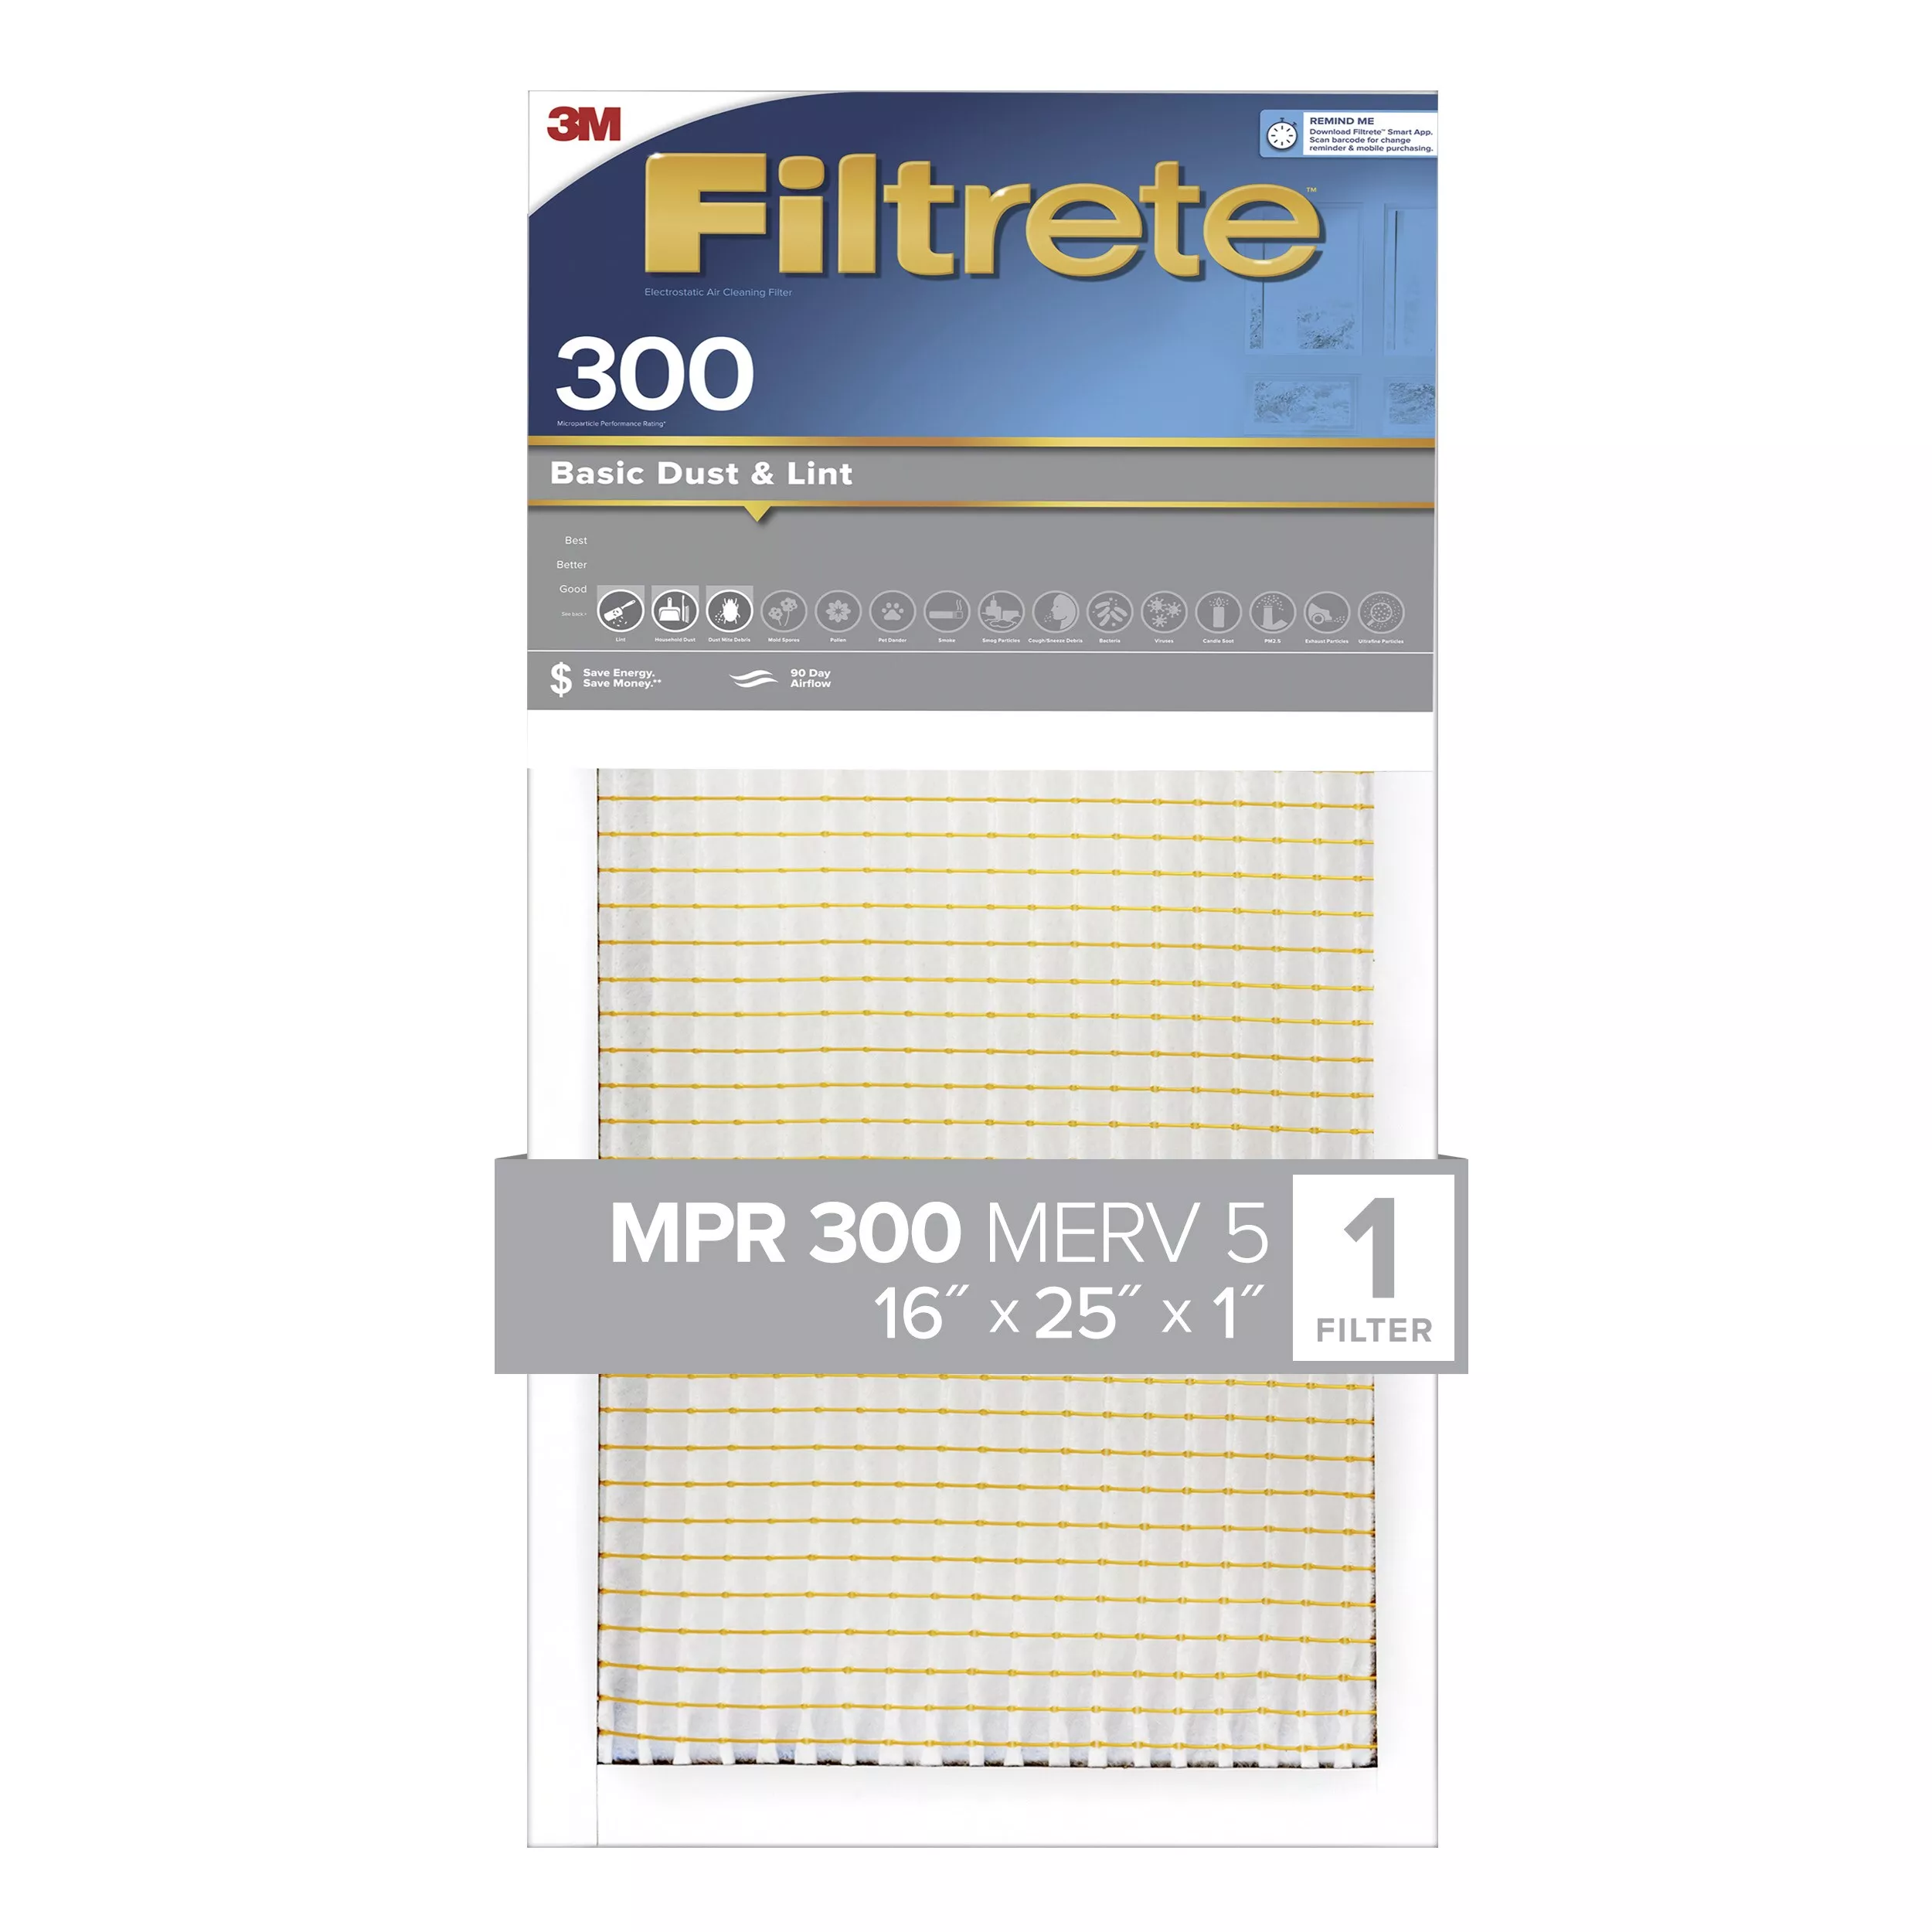 Filtrete™ Basic Dust & Lint Air Filter, 300 MPR, 301-4, 16 in x 25 in x
1 in (40.6 cm x 63.5 cm x 2.5 cm)